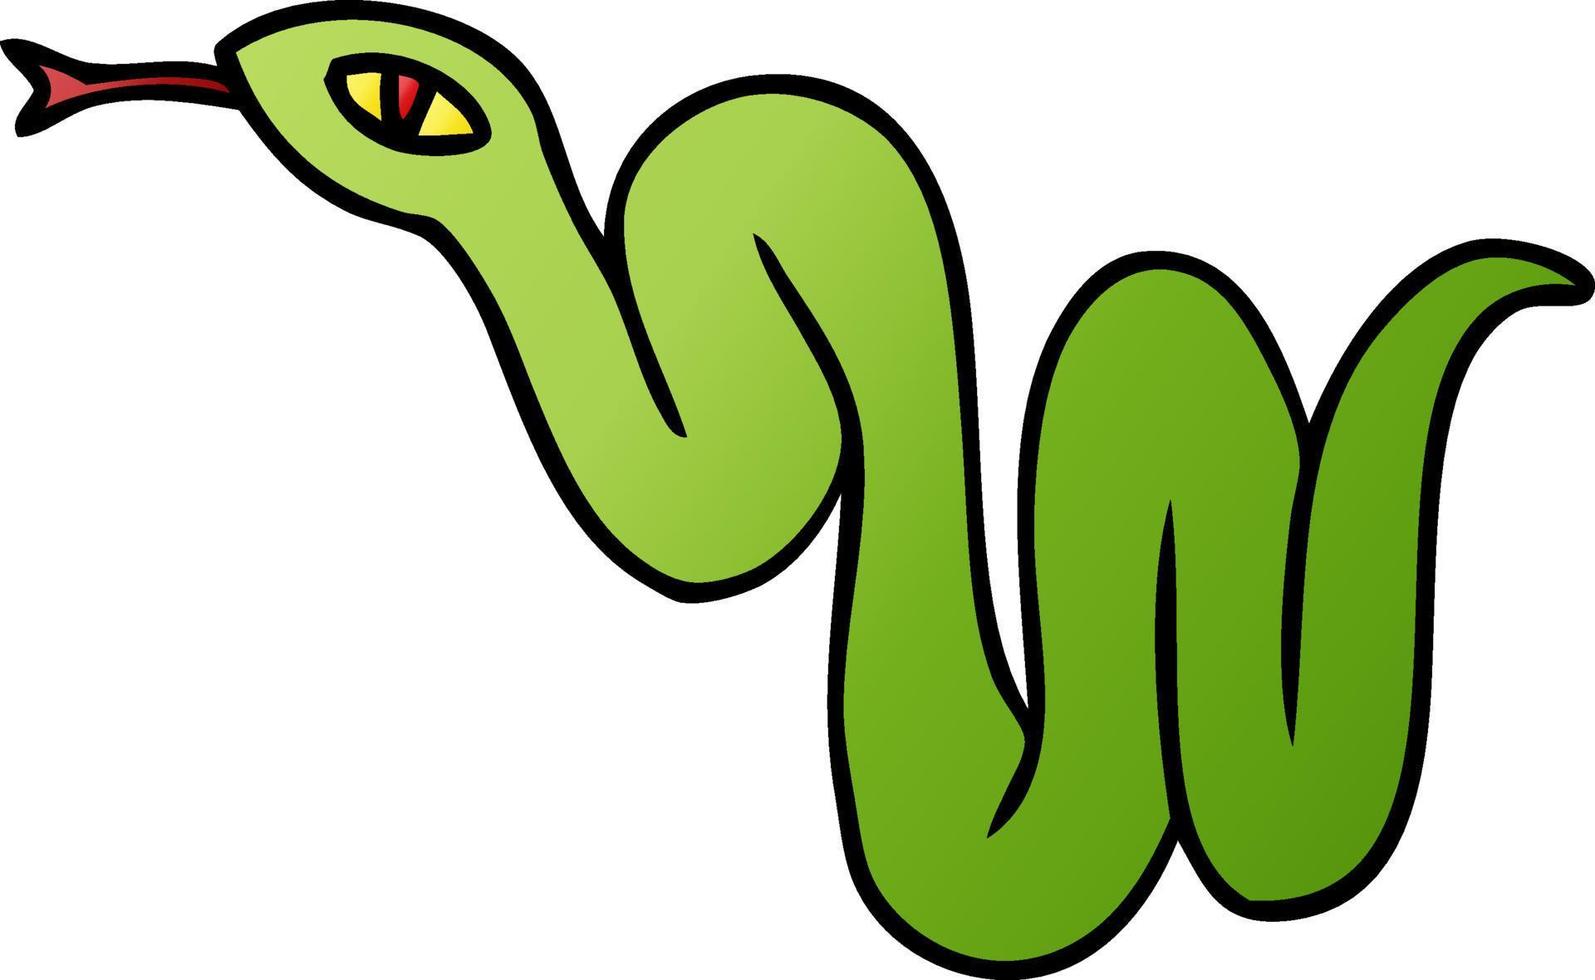 gradient cartoon doodle of a garden snake vector